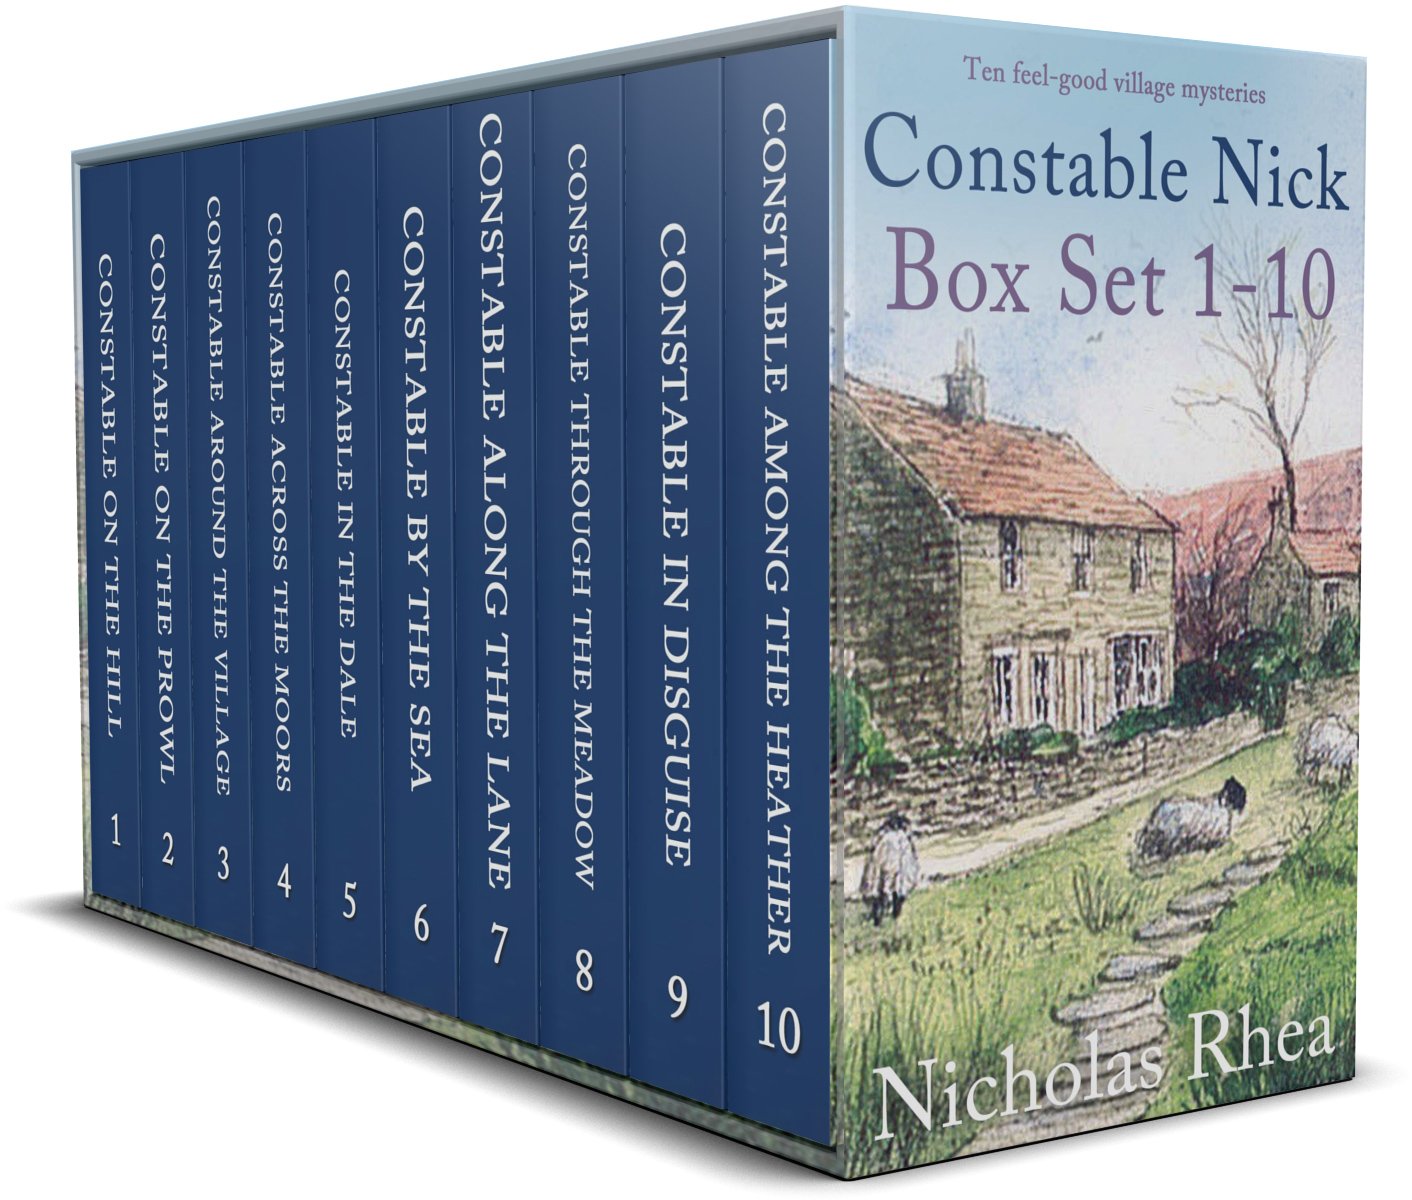 CONSTABLE NICK 1-10 BOX SET 610k cover publish.jpg